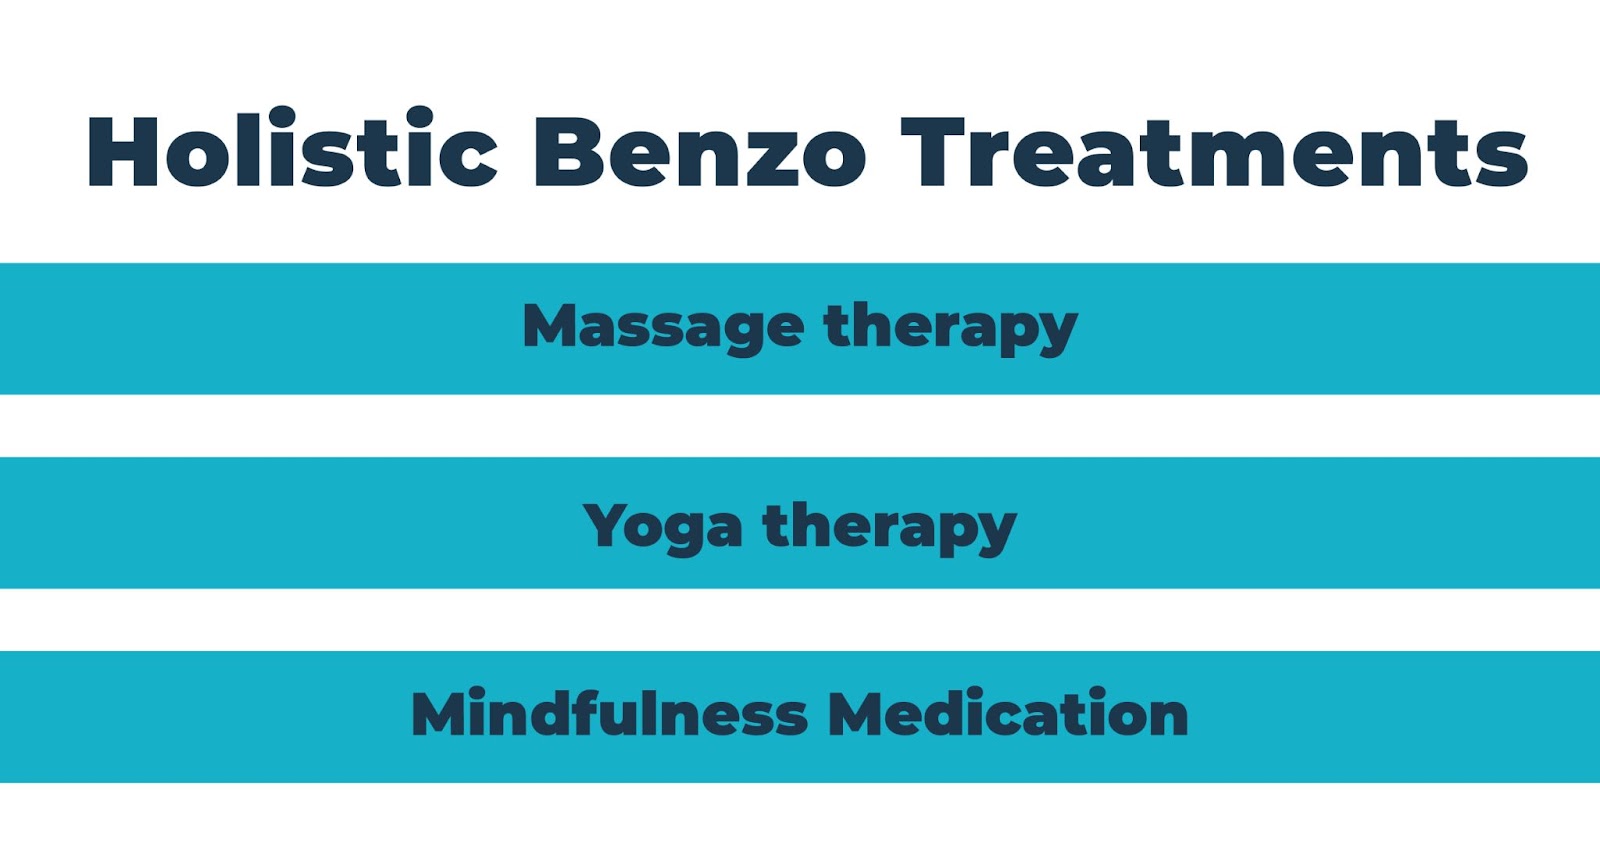 holistic benzo treatments. massage therapy yoga therapy mindfulness medication